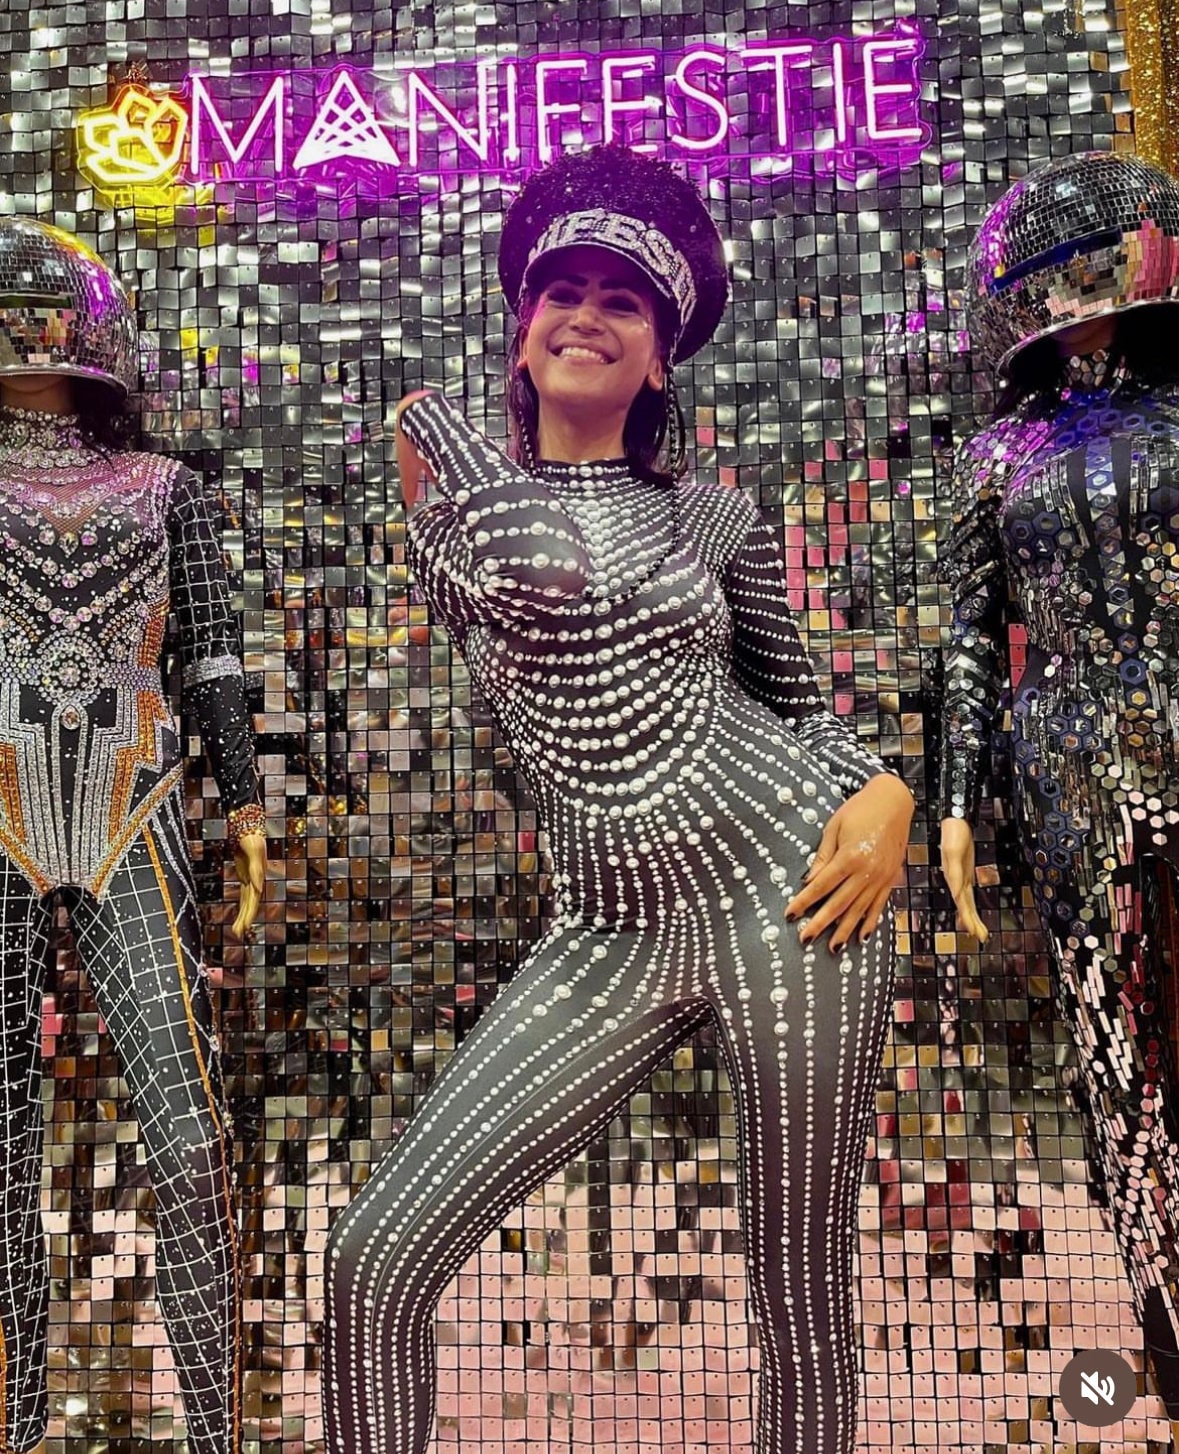 Salacia Rhinestone Bodysuit / Black Pearl Festival Outfit / New Years Eve Crystal Catsuit / Burning Man Futuristic Performer Costume Tribal